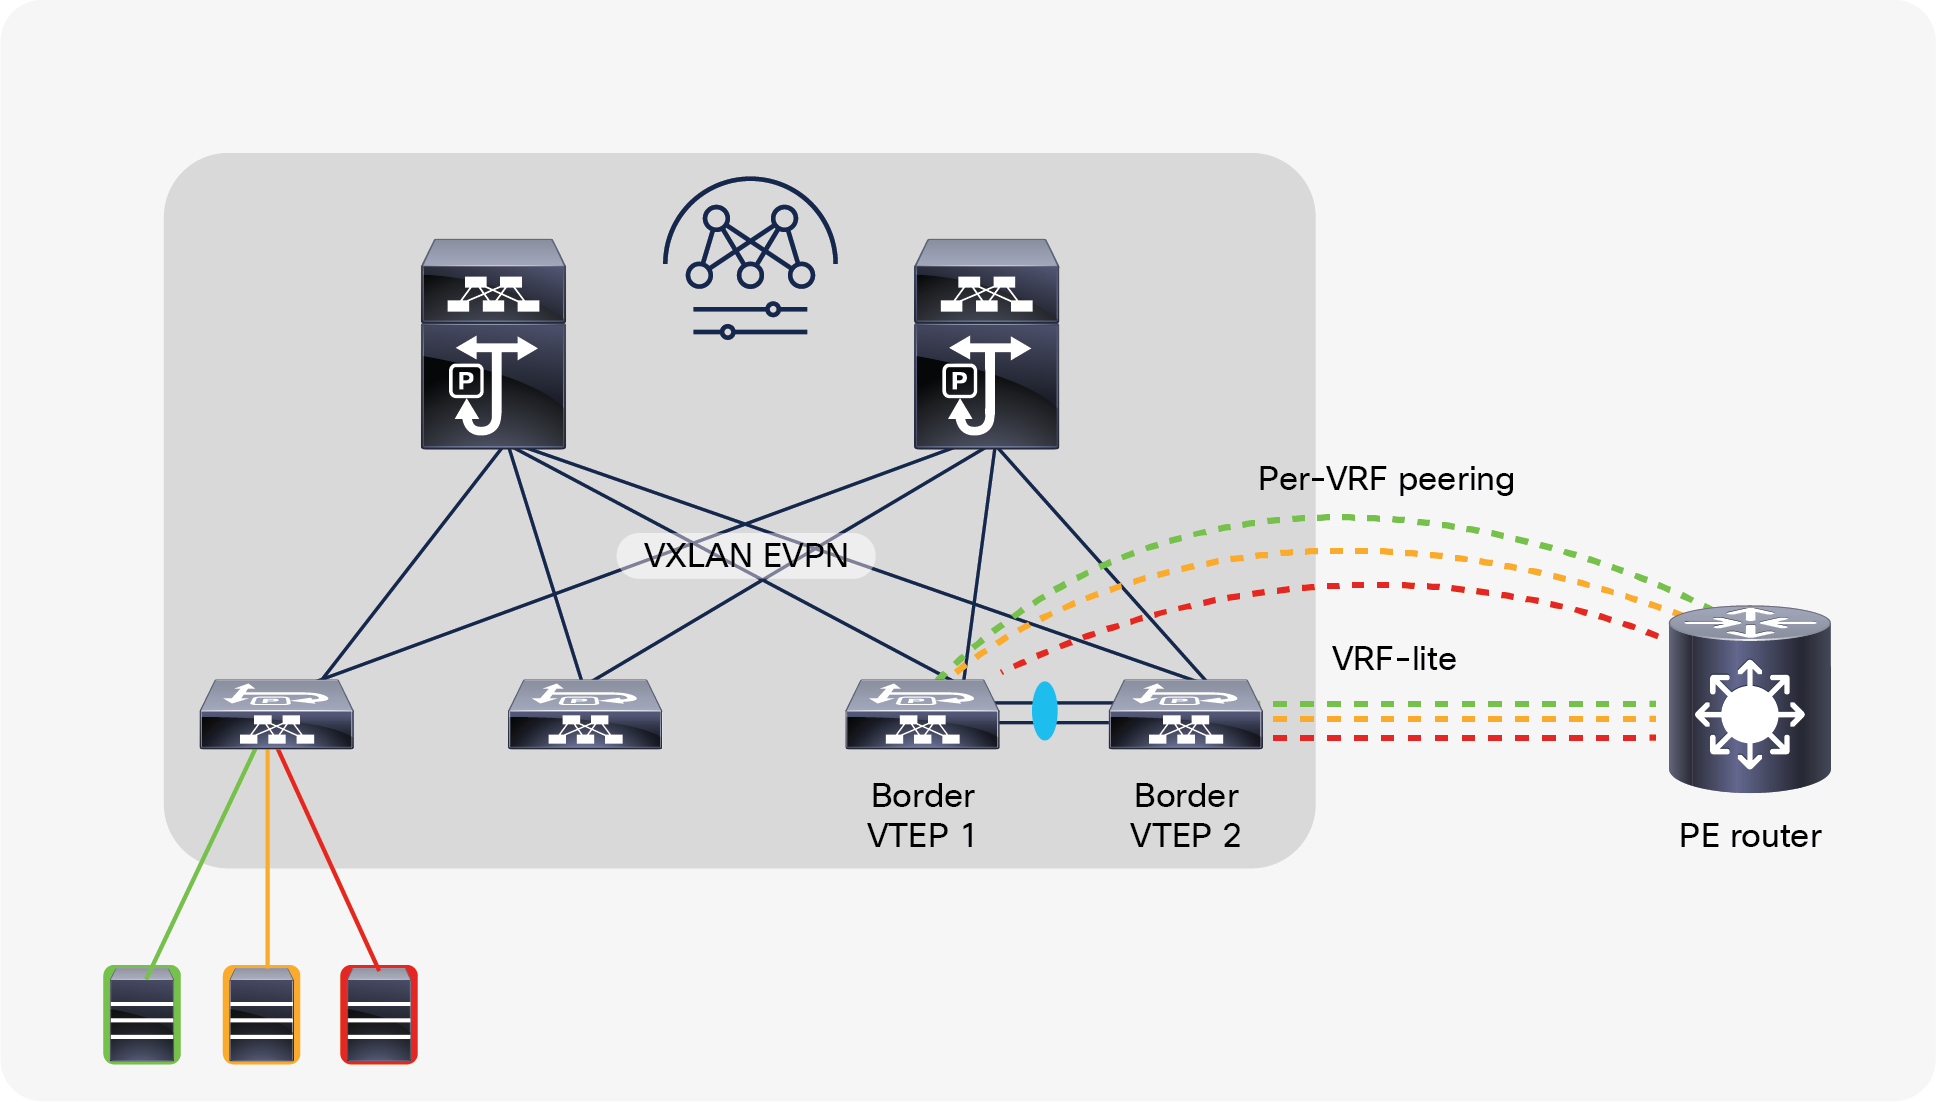 External Layer-3 connectivity – VRF-lite